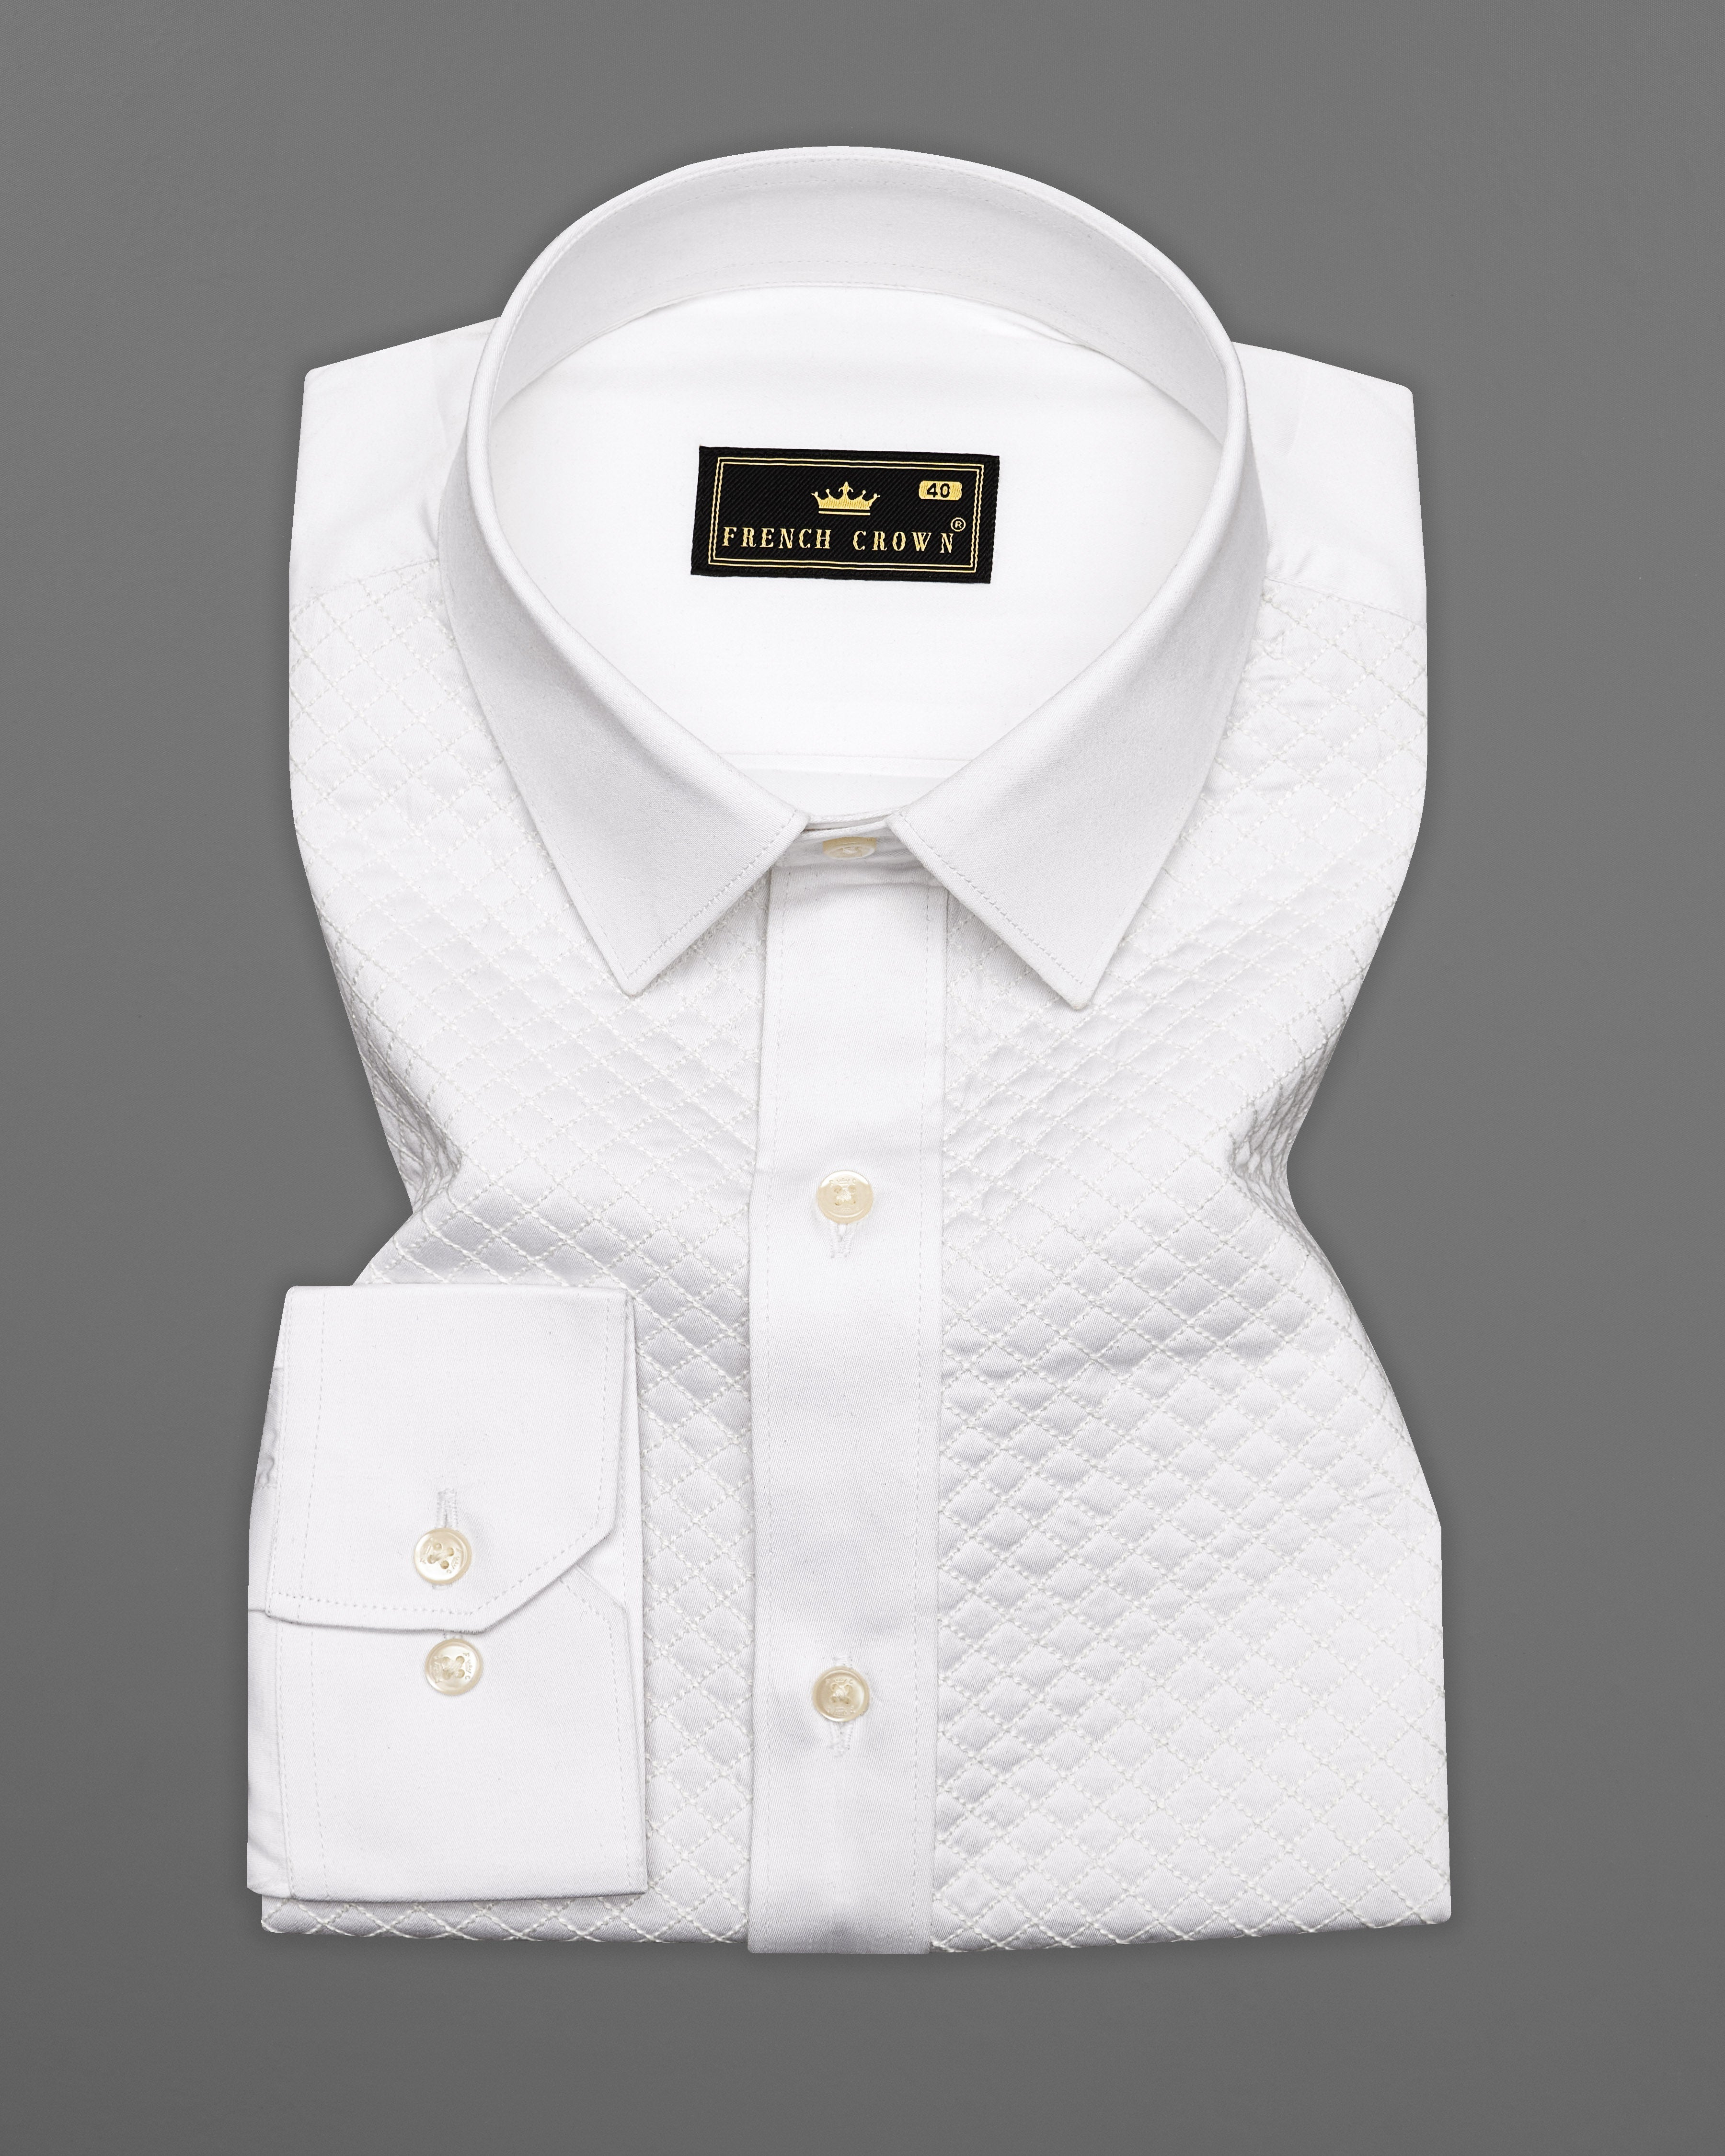 Bright White Subtle Sheen Quilt Textured Super Soft Premium Cotton Designer Shirt 9415-P580-38, 9415-P580-H-38, 9415-P580-39, 9415-P580-H-39, 9415-P580-40, 9415-P580-H-40, 9415-P580-42, 9415-P580-H-42, 9415-P580-44, 9415-P580-H-44, 9415-P580-46, 9415-P580-H-46, 9415-P580-48, 9415-P580-H-48, 9415-P580-50, 9415-P580-H-50, 9415-P580-52, 9415-P580-H-52